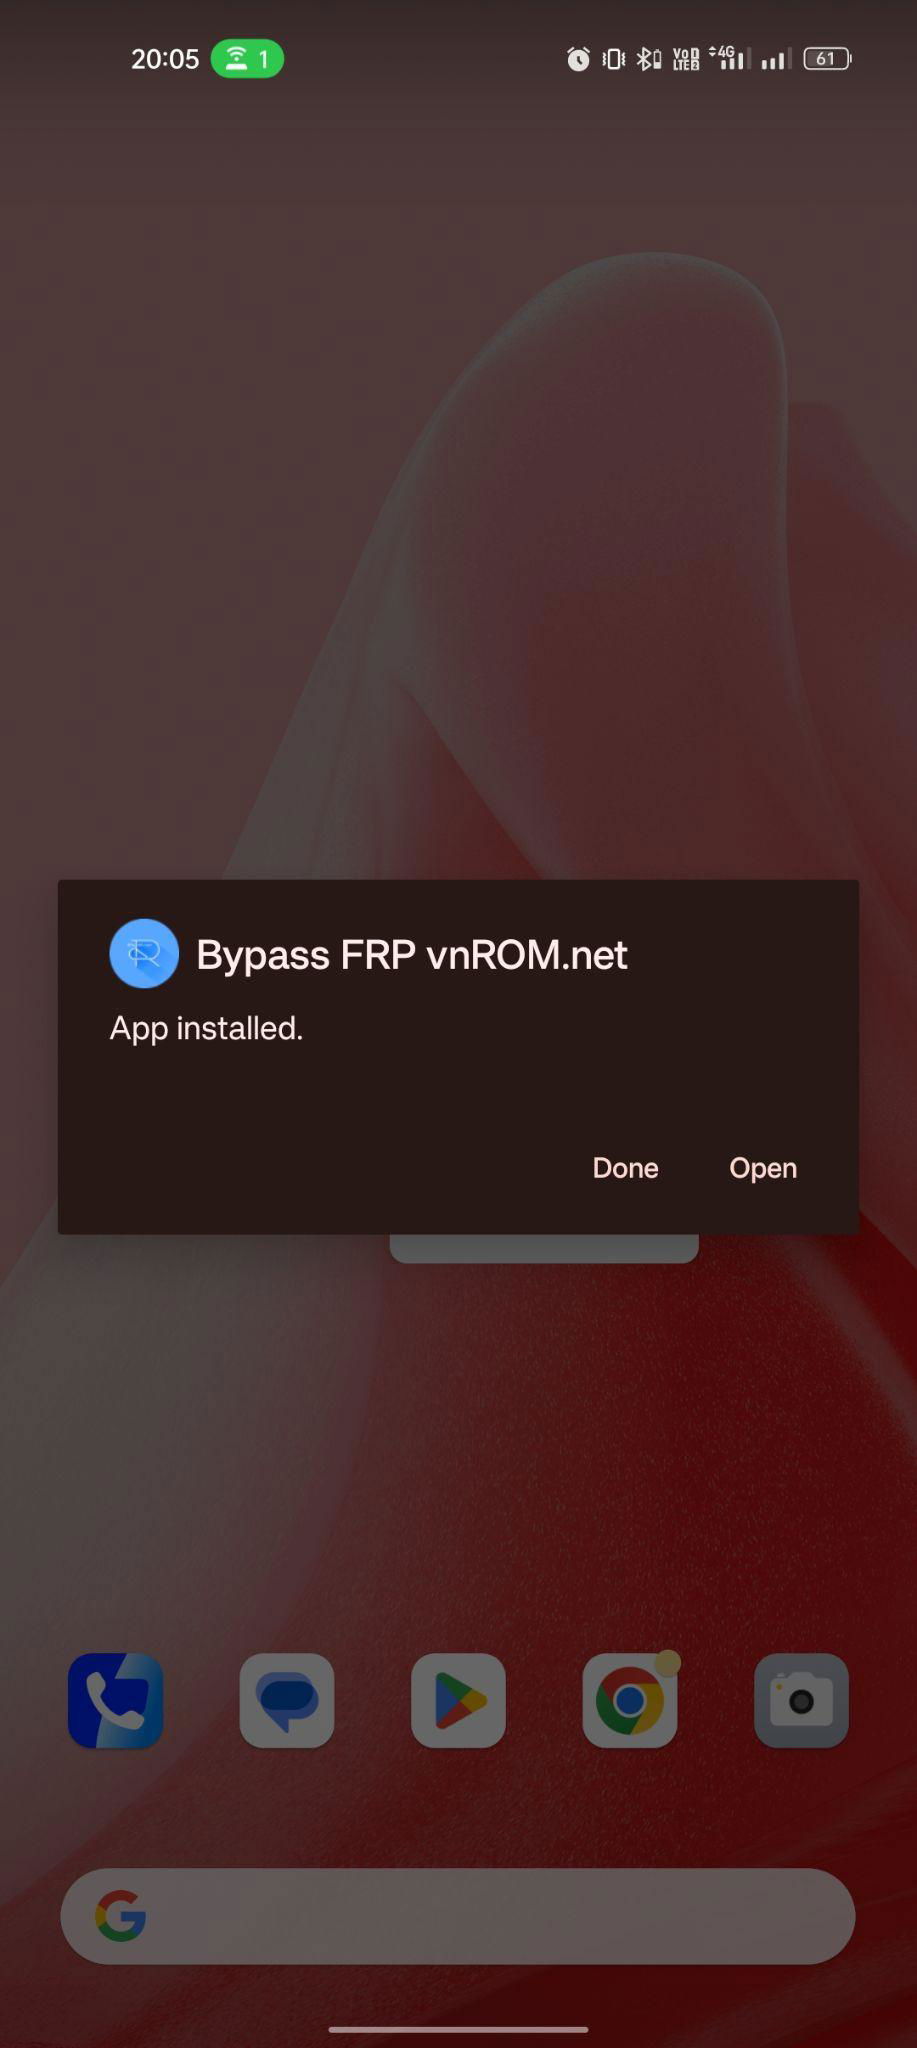 vnROM Bypass FRP apk installed